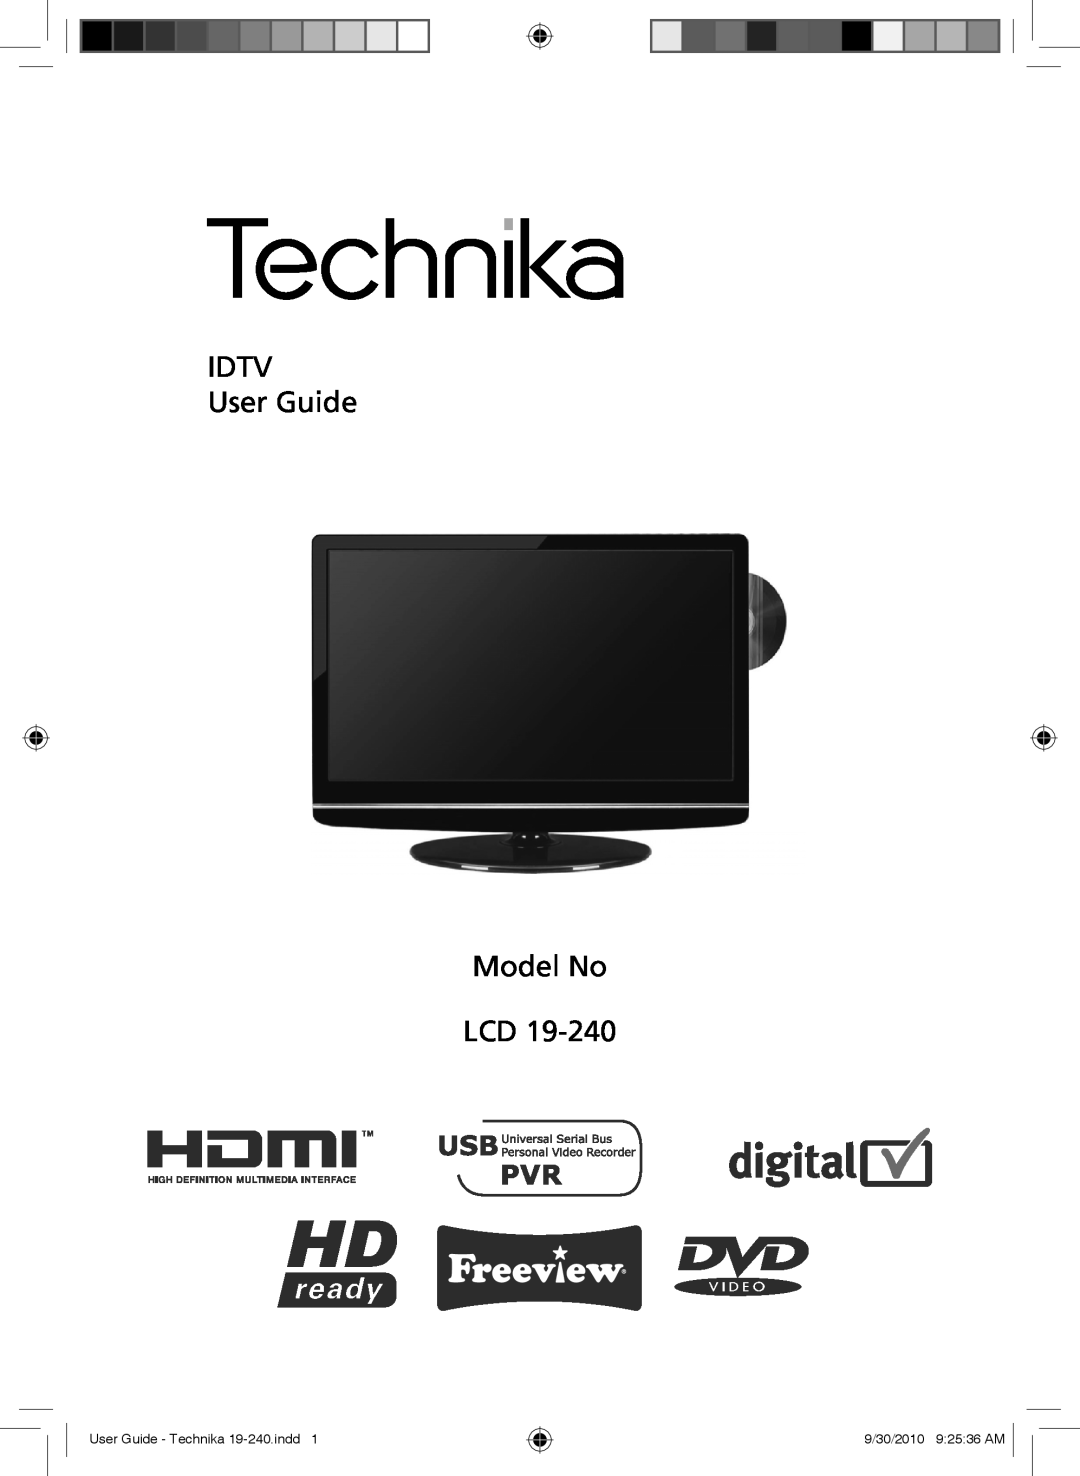 Technika LCD 19-240 manual IDTV User Guide Model No LCD, User Guide - Technika 19-240.indd, 9/30/2010 92536 AM 